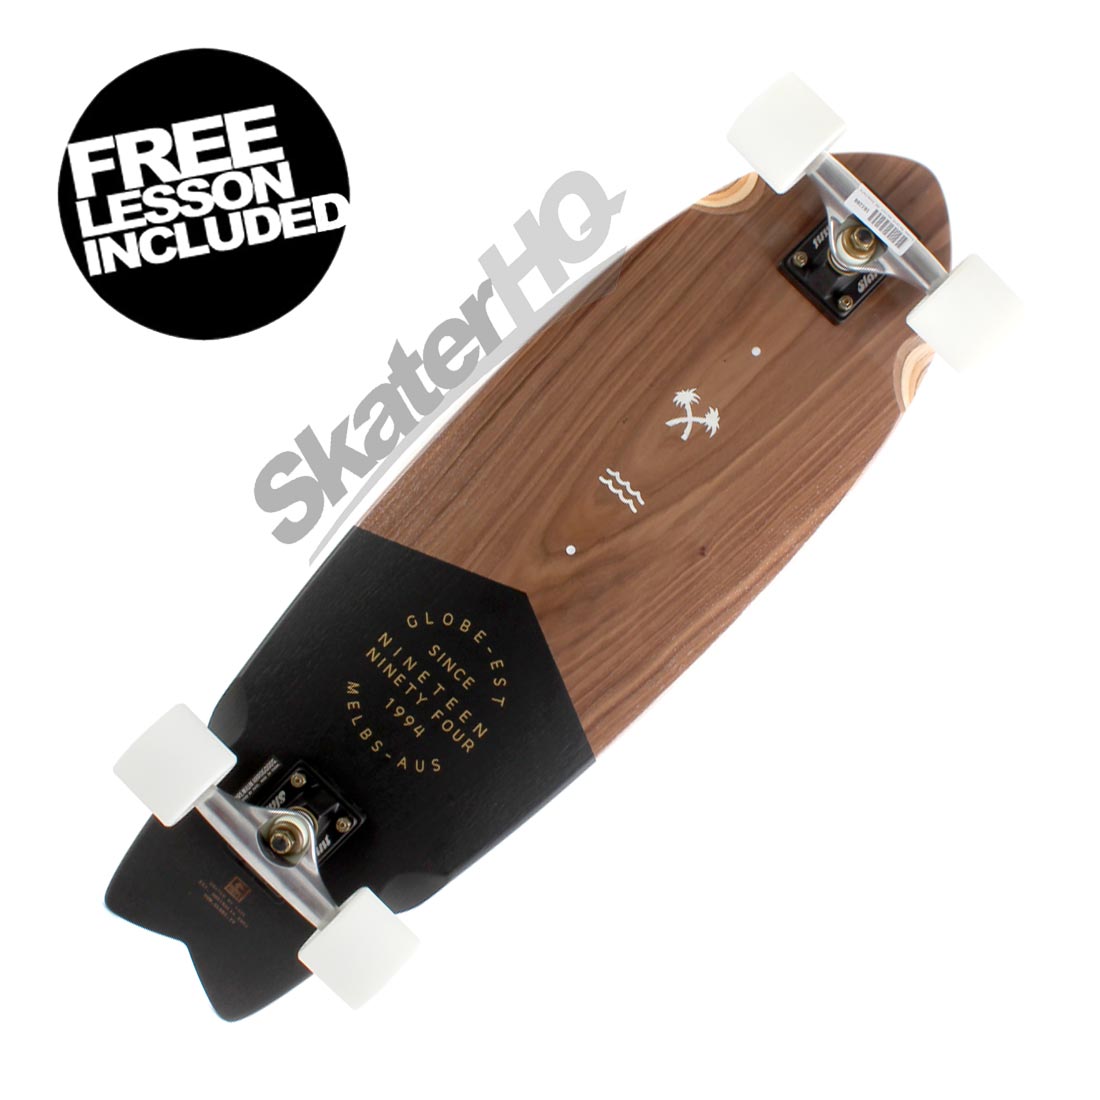 Globe Acland Walnut 30 Complete Skateboard Compl Cruisers